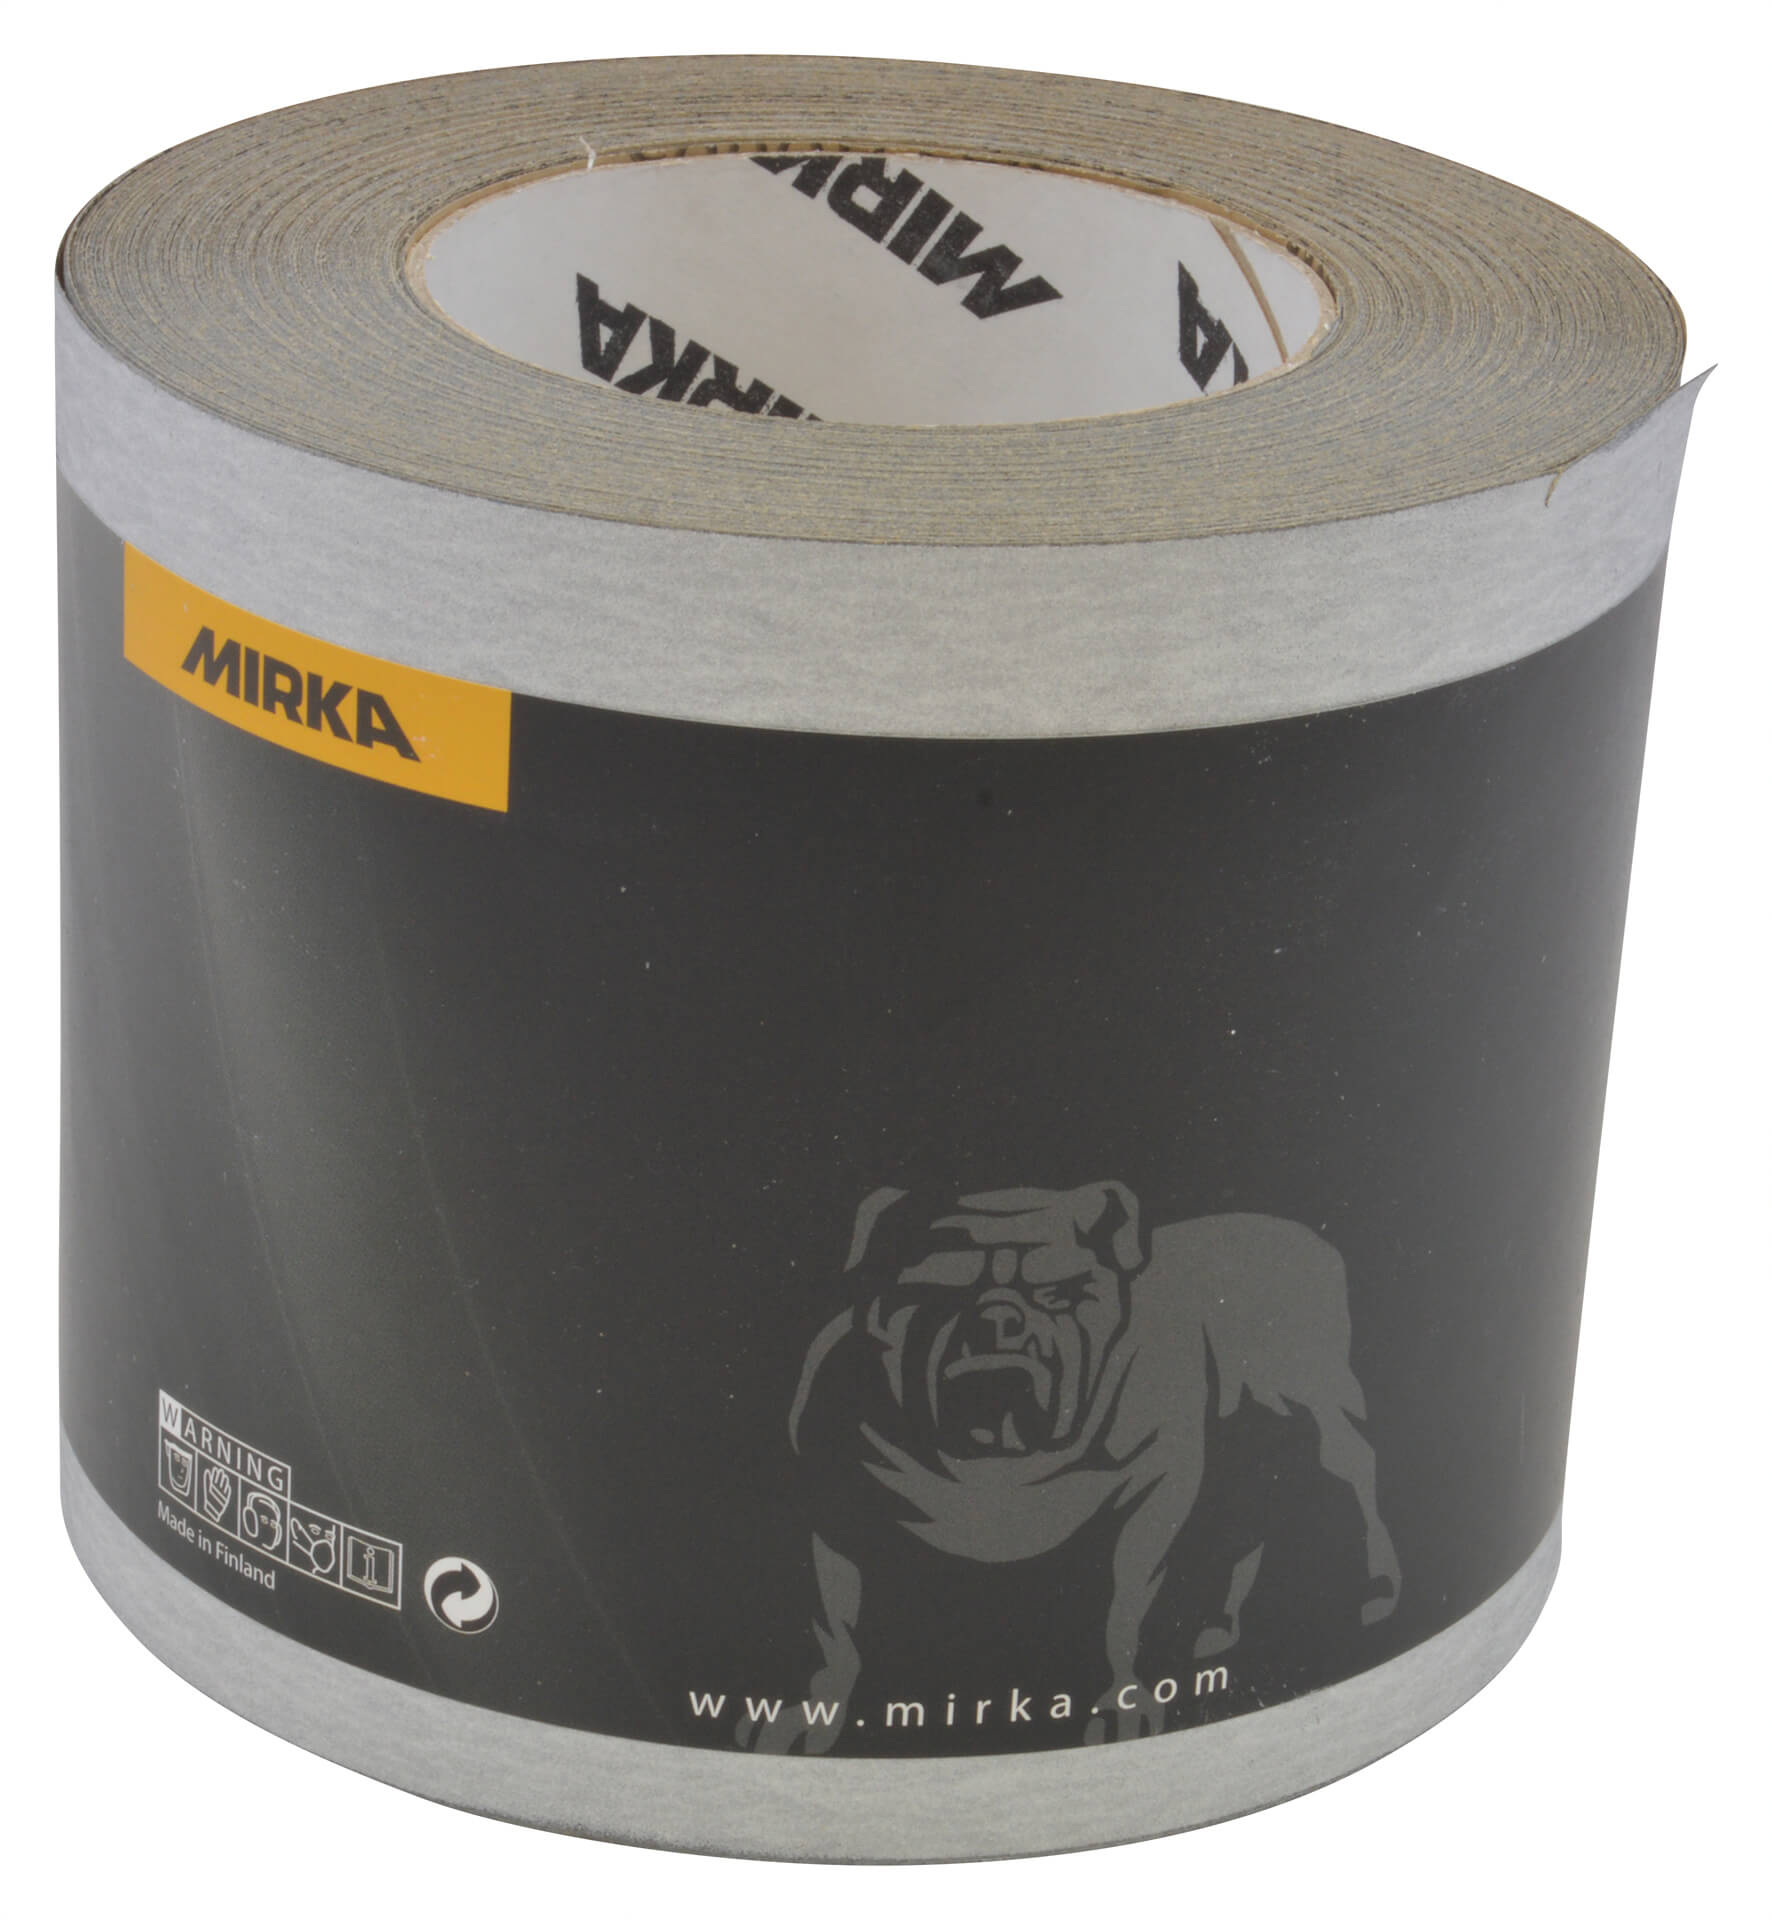 Mirka Abrasive Carat Roll (115mm x 50M) - 320 Grit